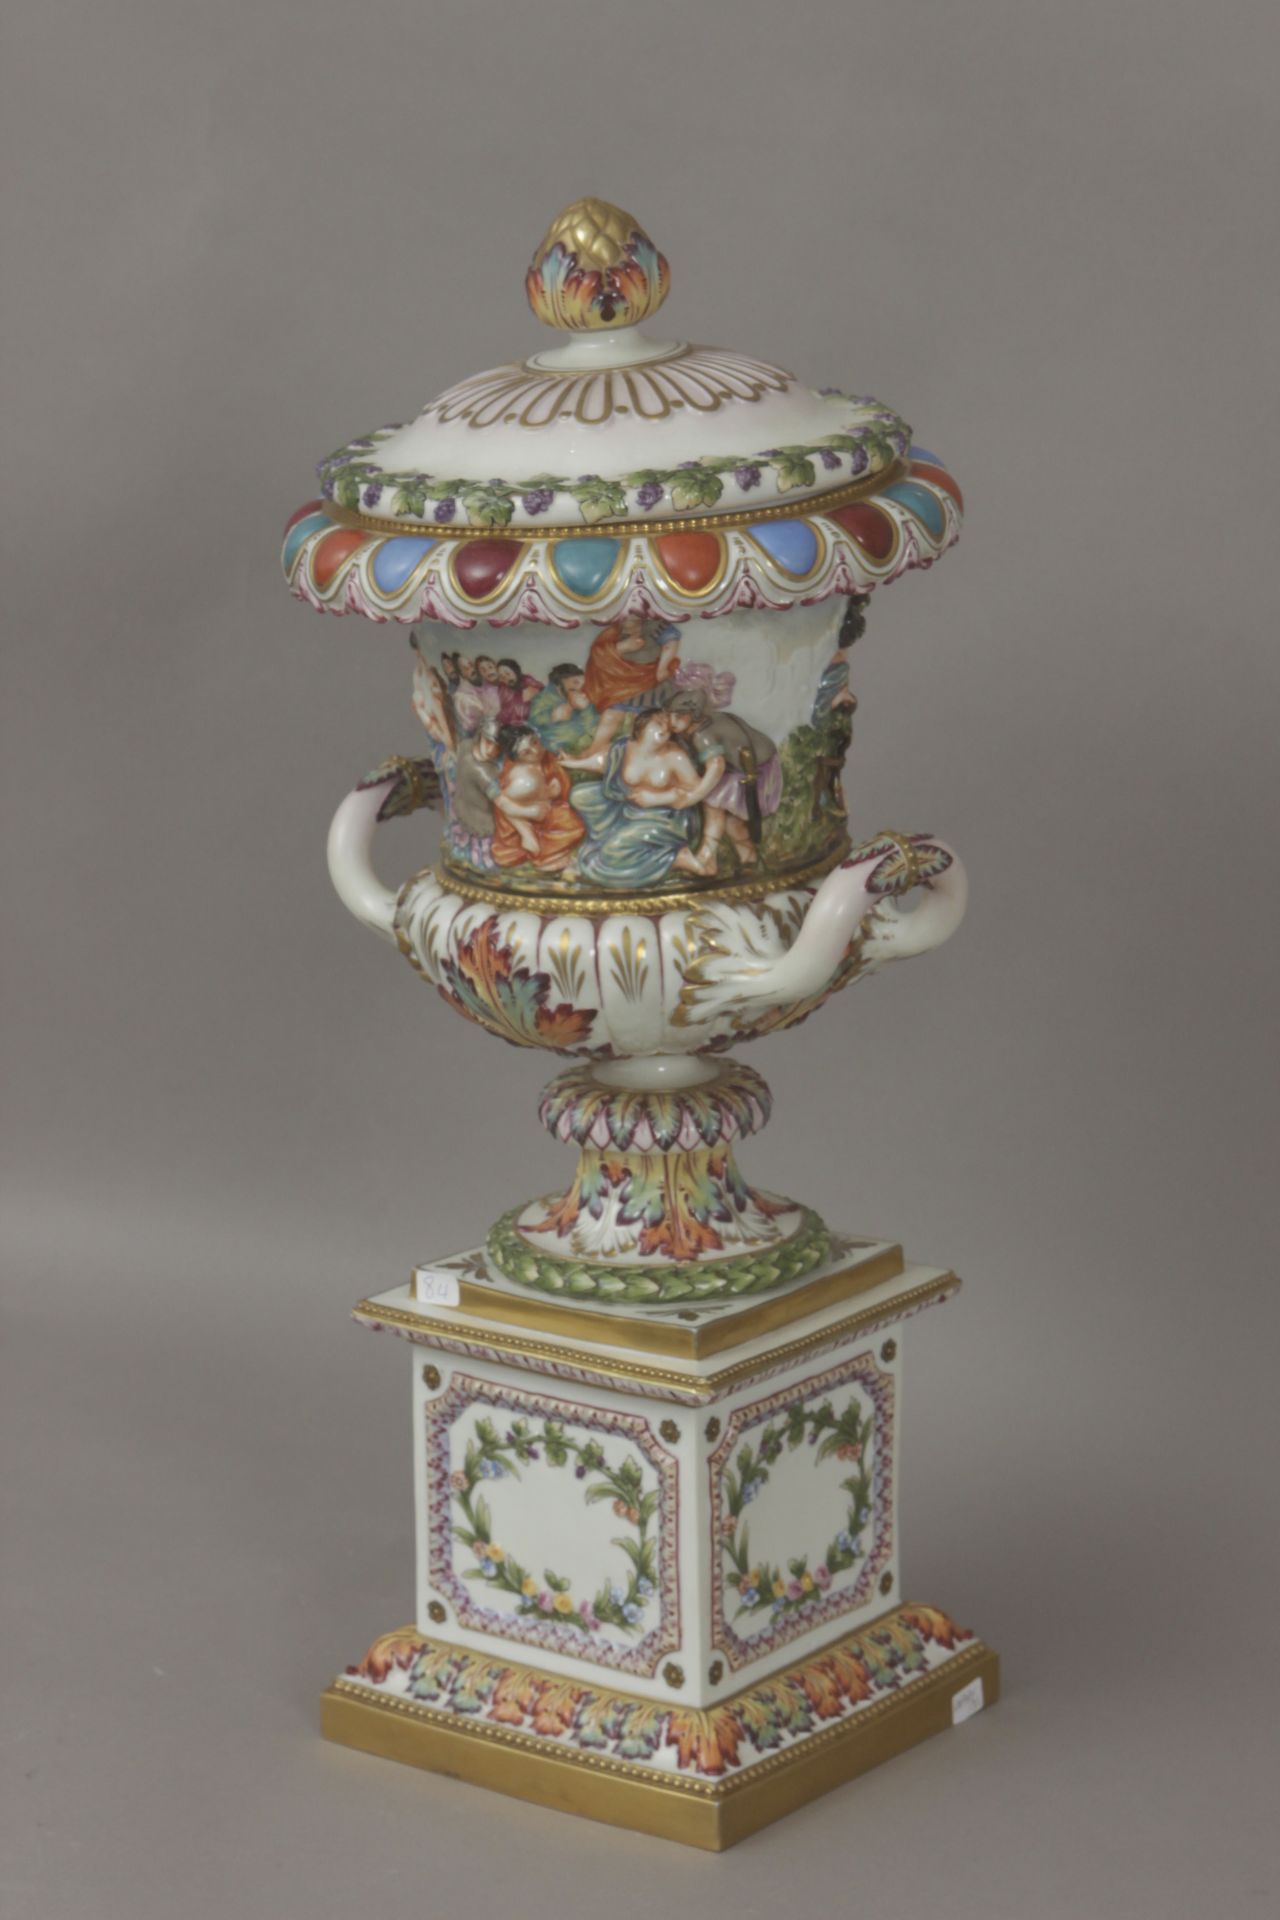 A 20th century Italian Medici vase in Capodimonte porcelain - Image 2 of 5